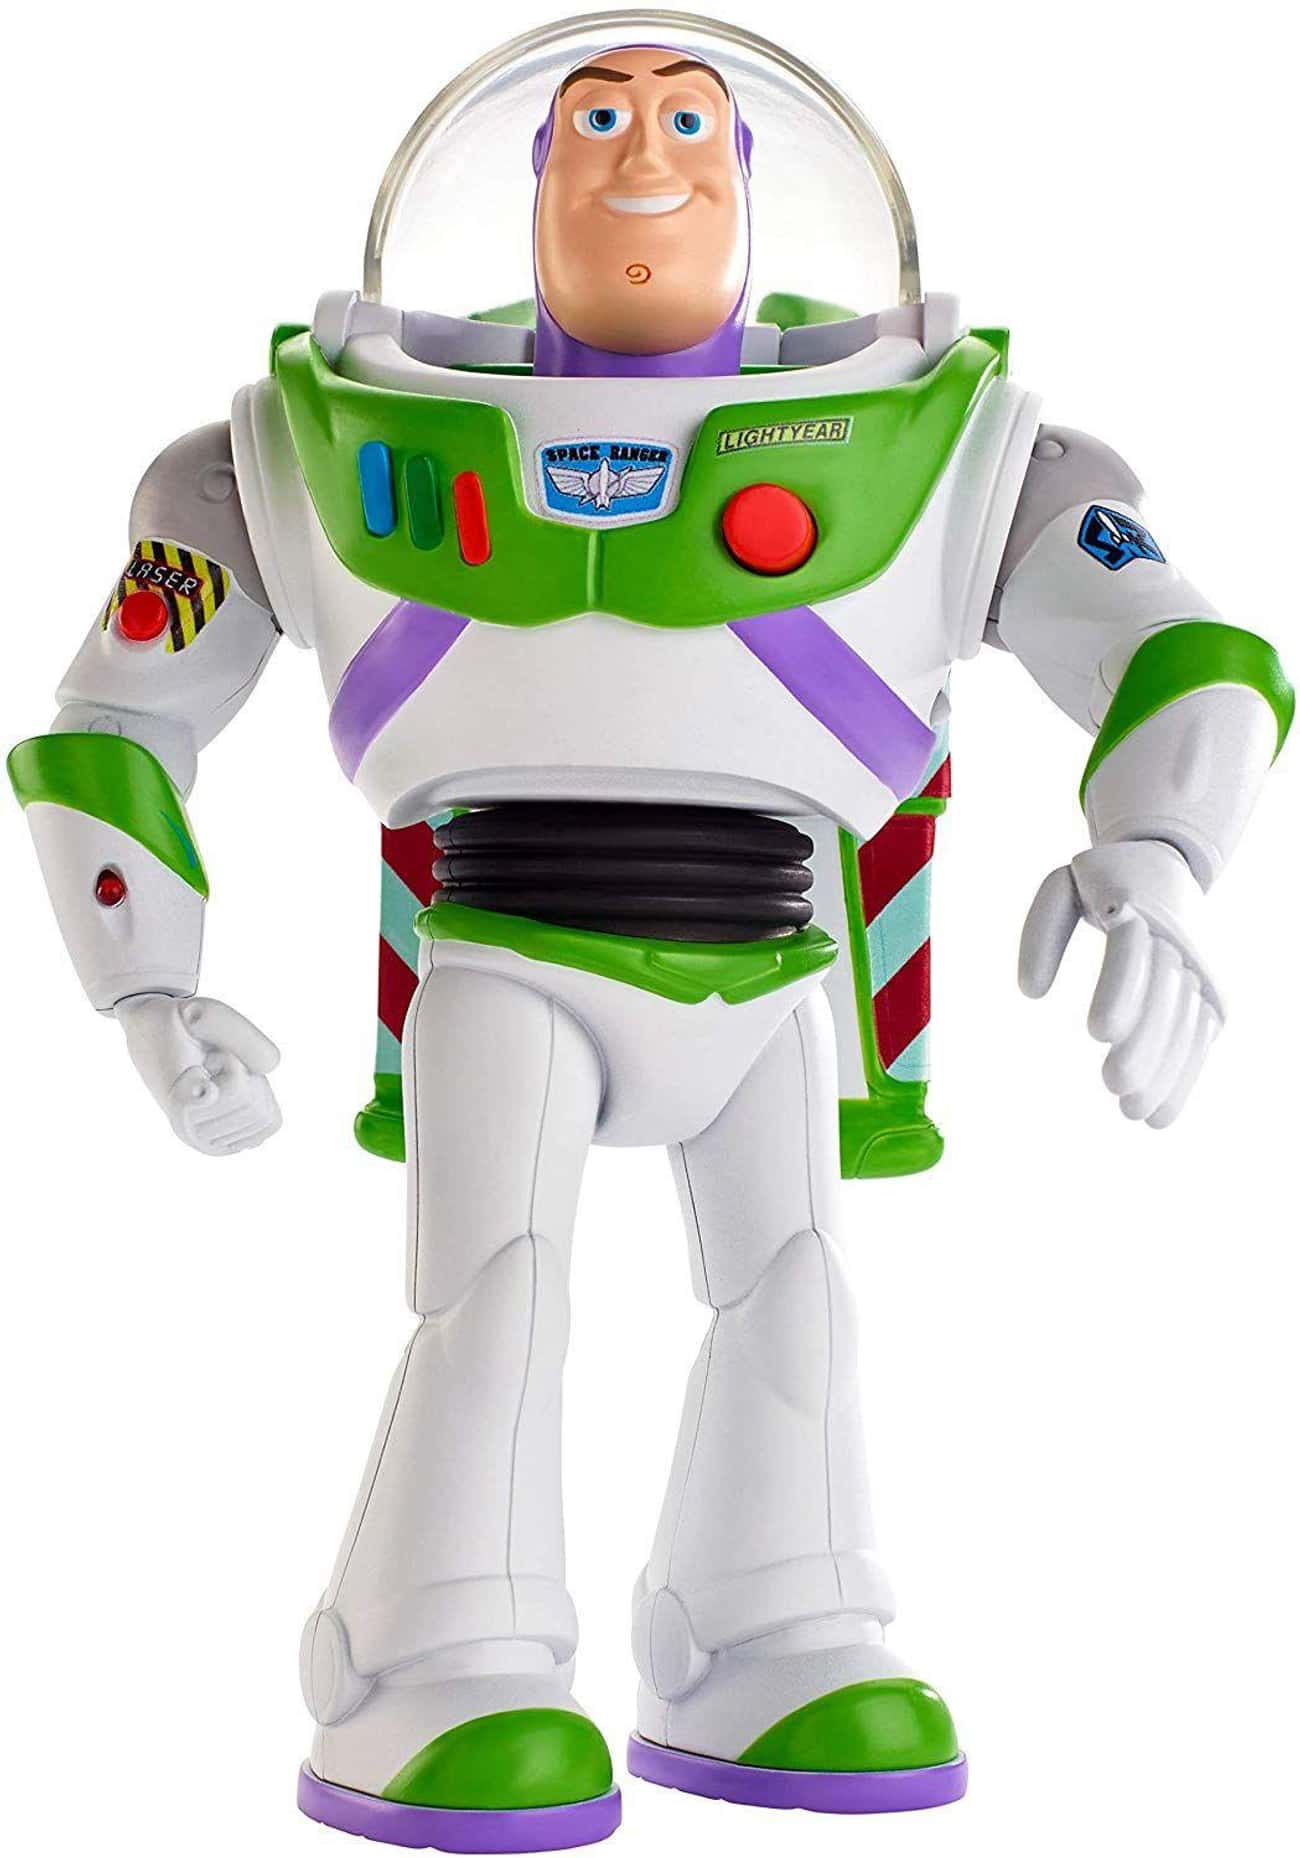 Toy Story Ultimate Walking Buzz Lightyear